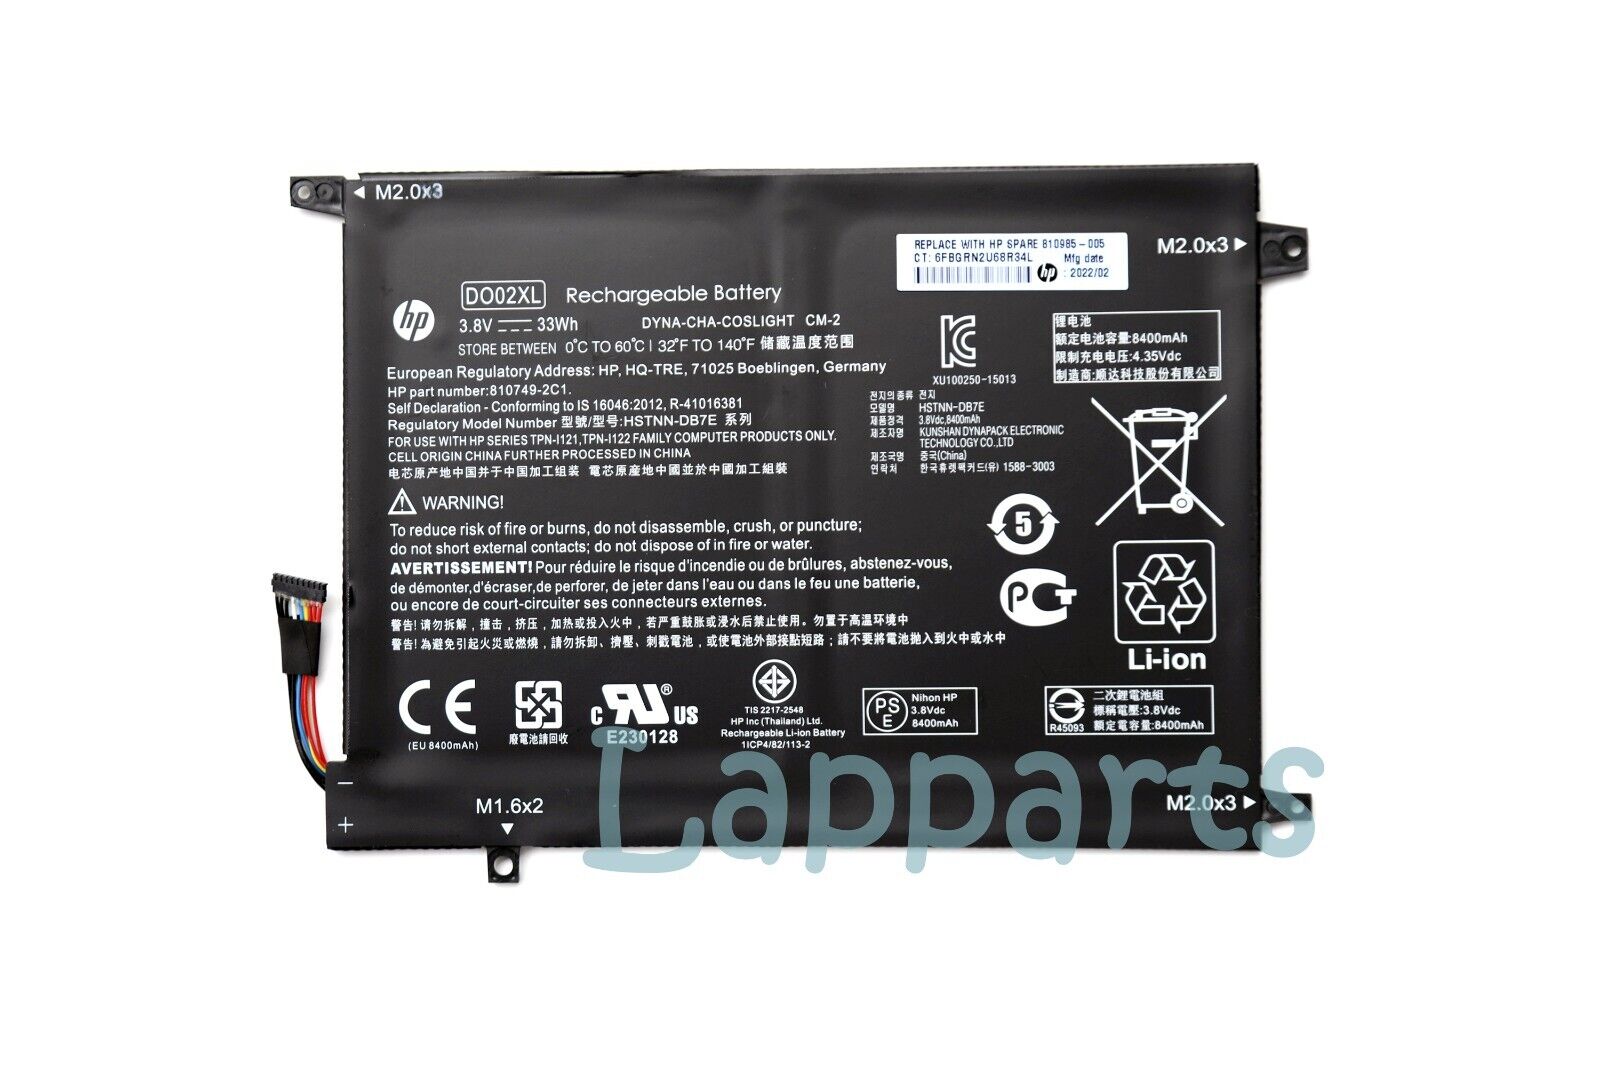 New Original DO02XL Battery for HP Pavilion X2 210 G1 10-n 810749-421 HSTNN-LB6Y